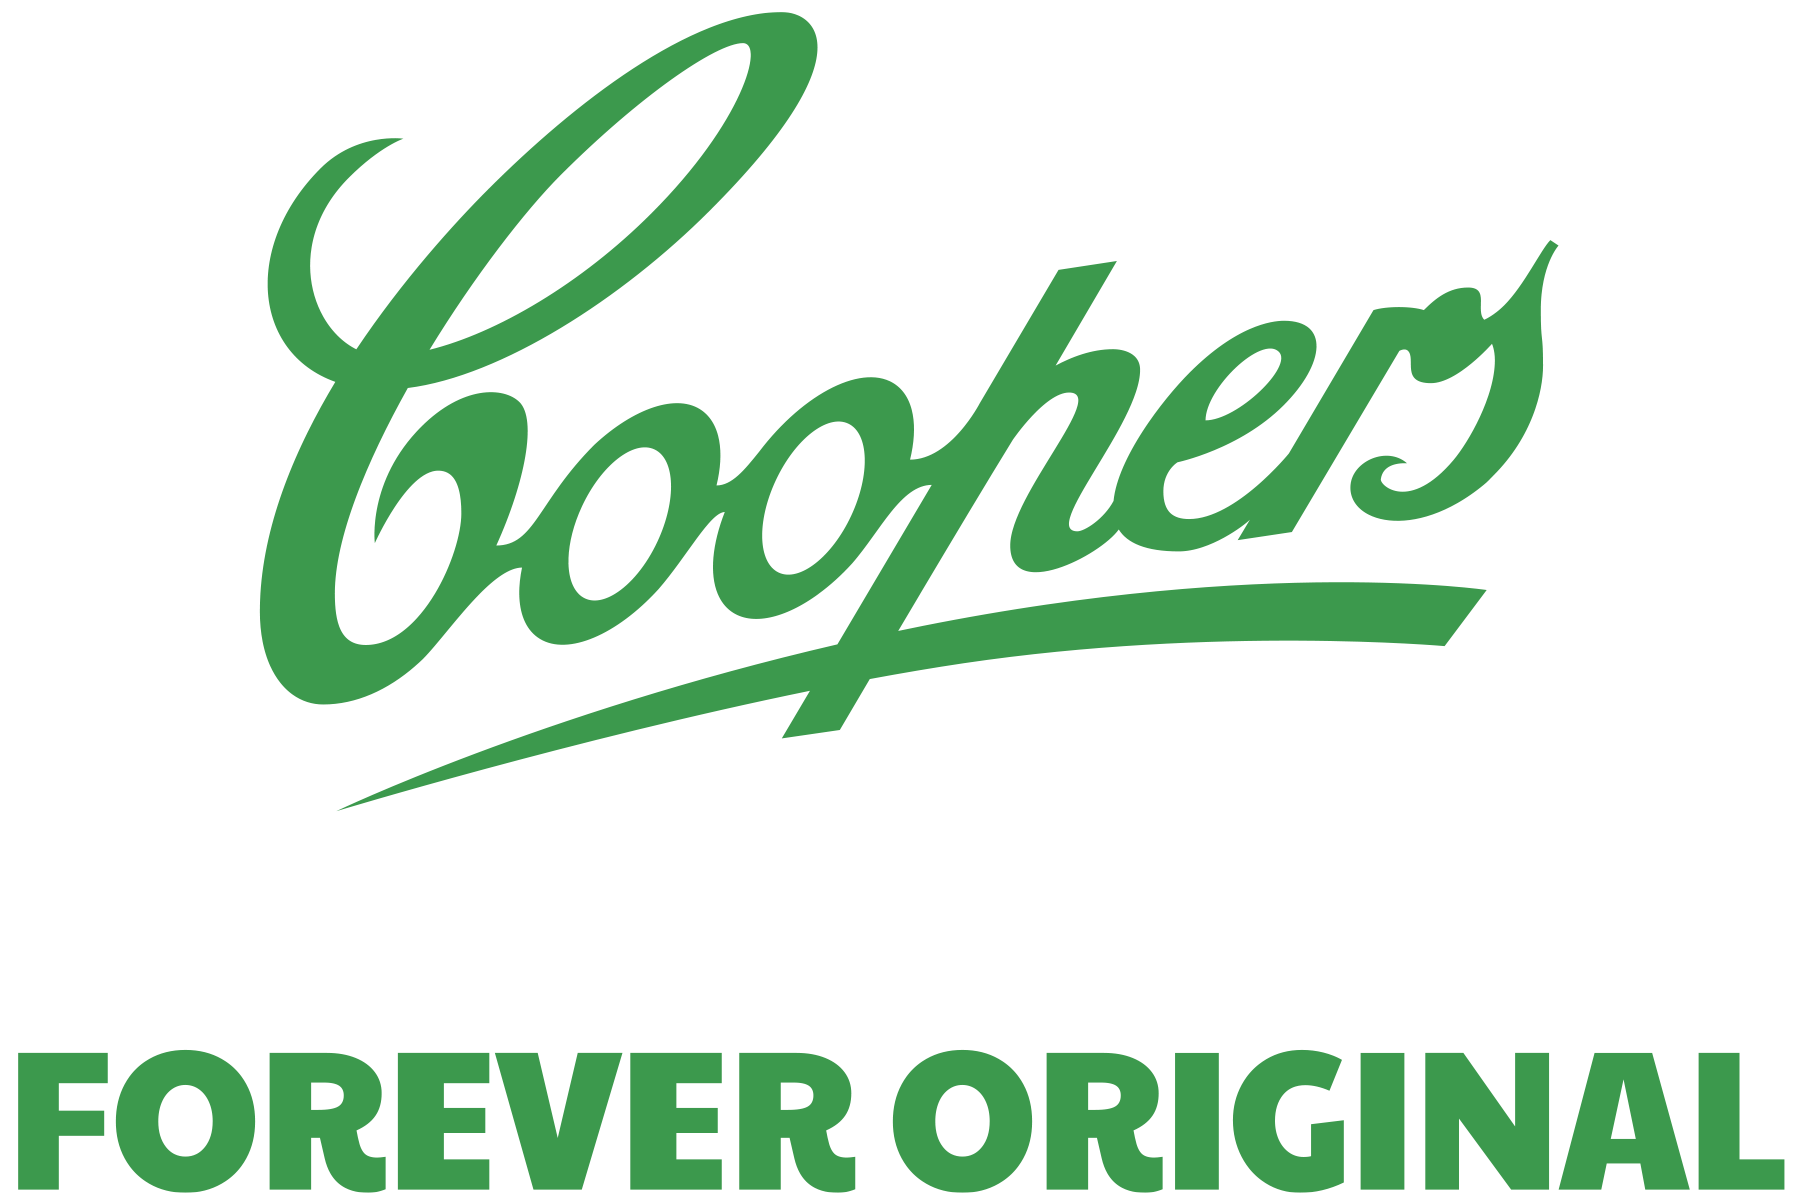 Coopers; Forever Original